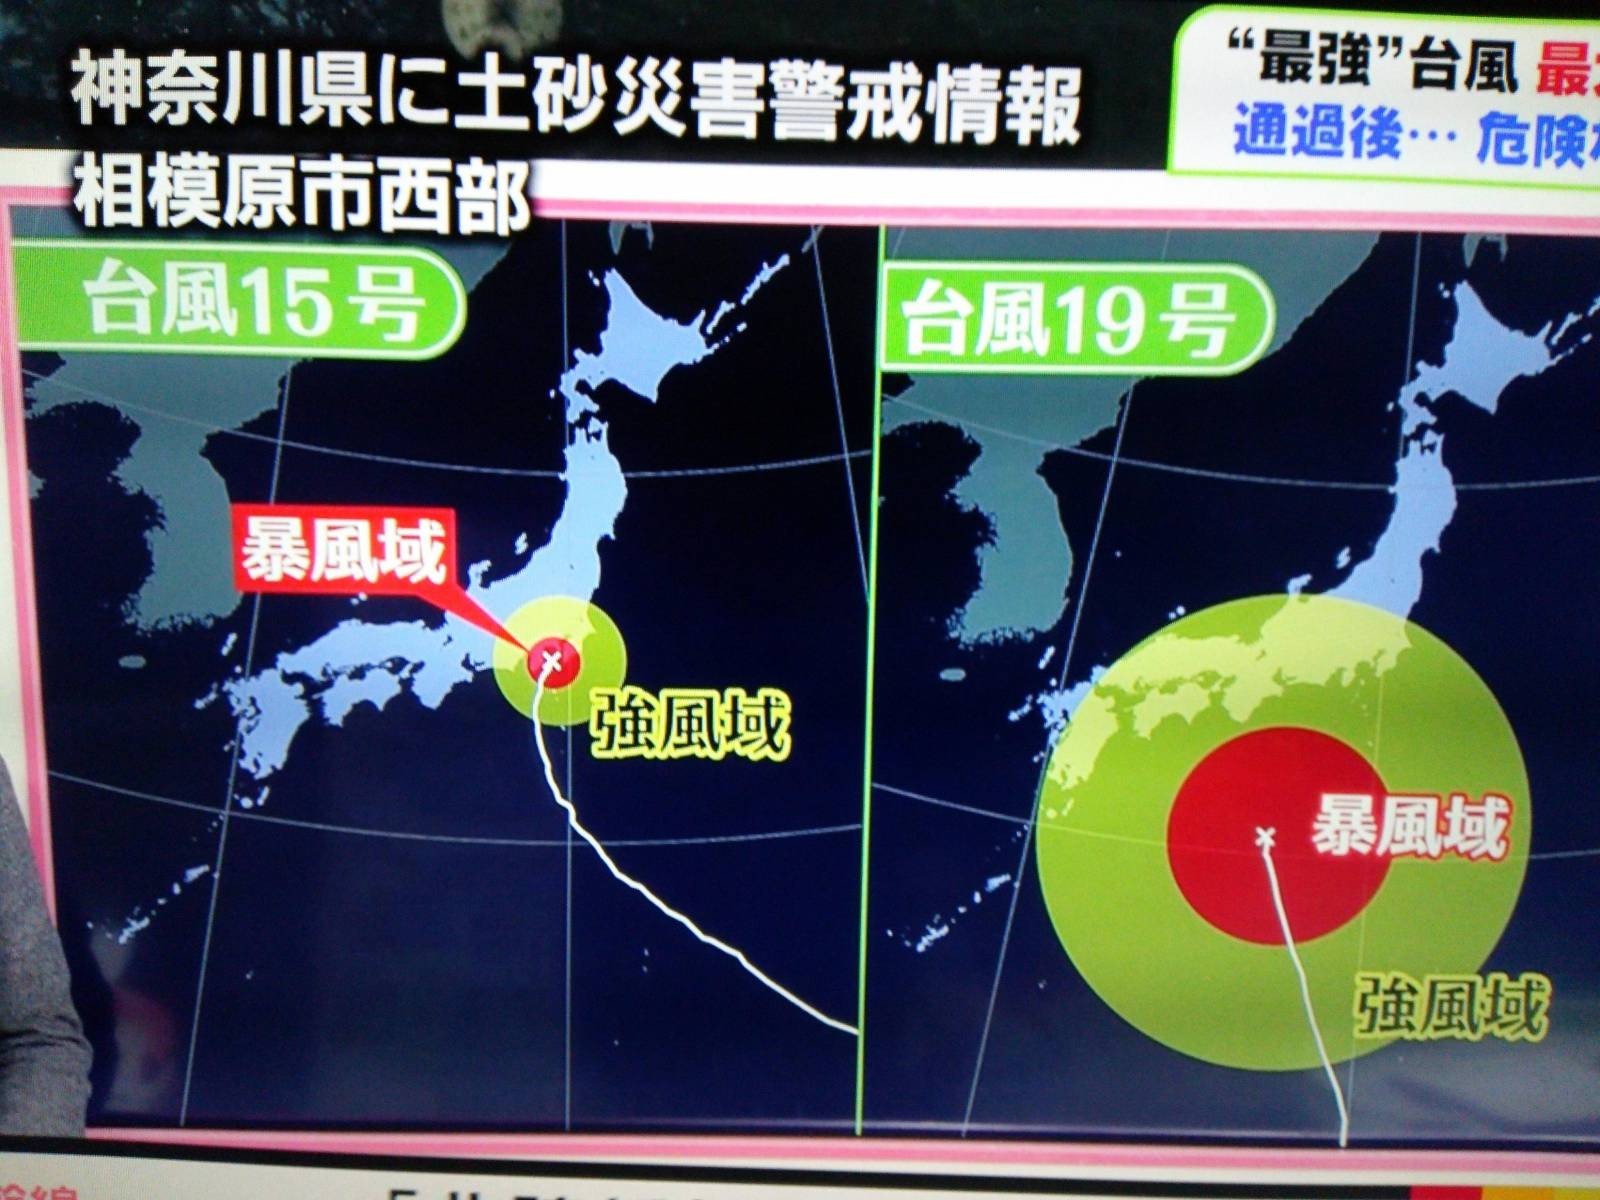 [Image] Size comparison between this typhoon and No. 15 wwwwwwwwwwwwwww